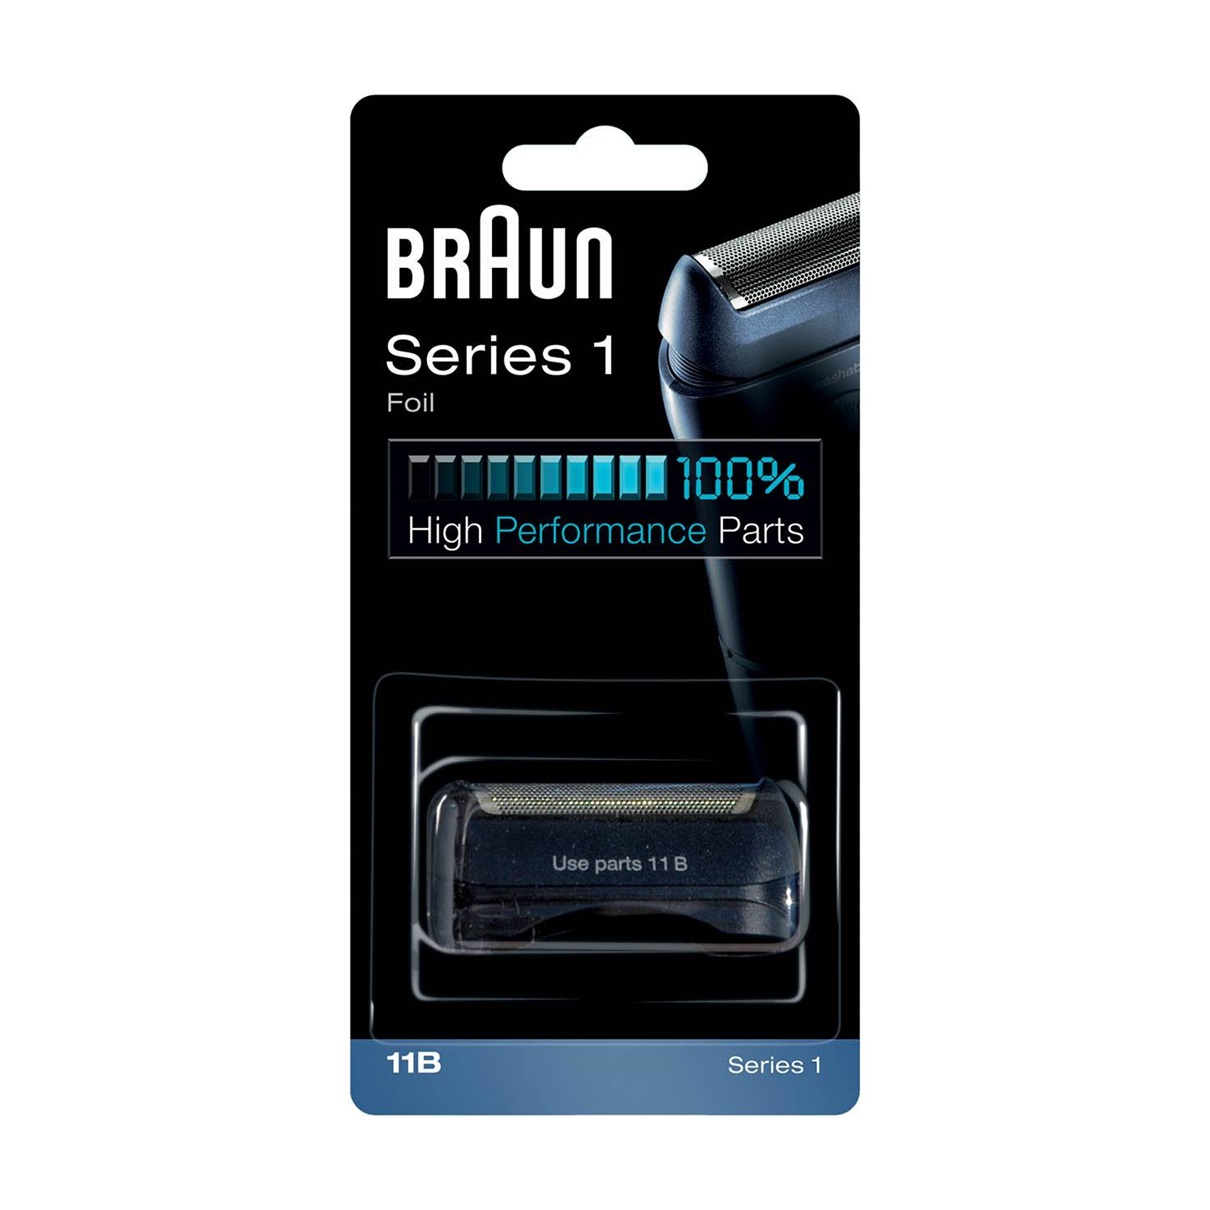 Сетка и режущий блок для бритв Braun 11B сетка и режущий блок cruser 20s 2000 series braun браун 65733762 81253250 81387934